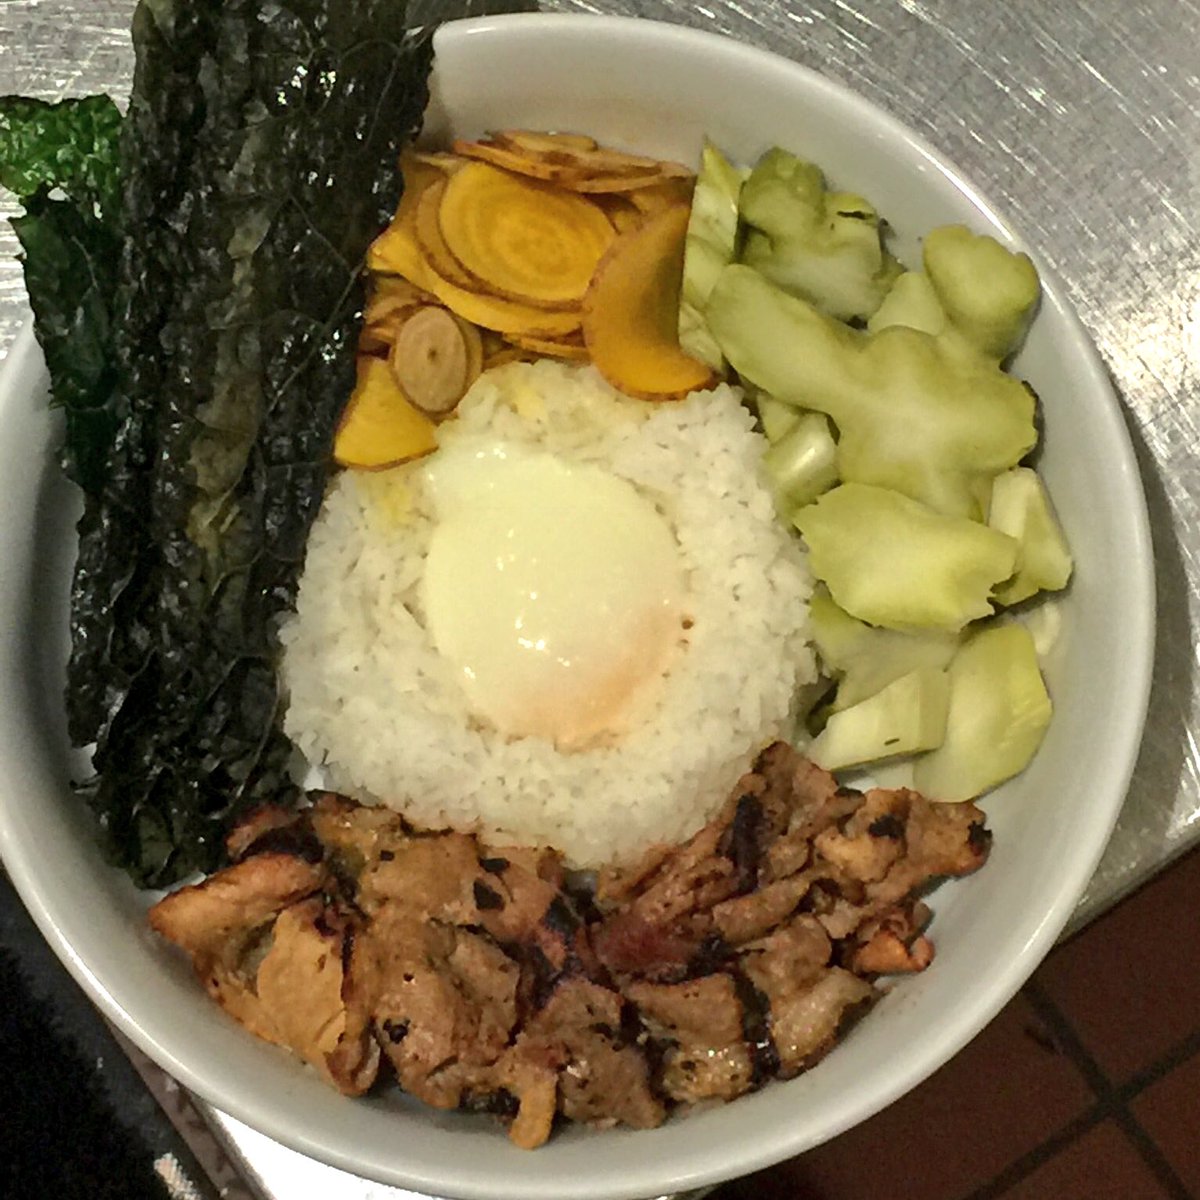 Rocking these Korean pork bowls @traveledfarmer #goldenbeets #pickledbroccoli #runnyegg from @MasseyCreekFarm #crispykale & #porkbulgogi